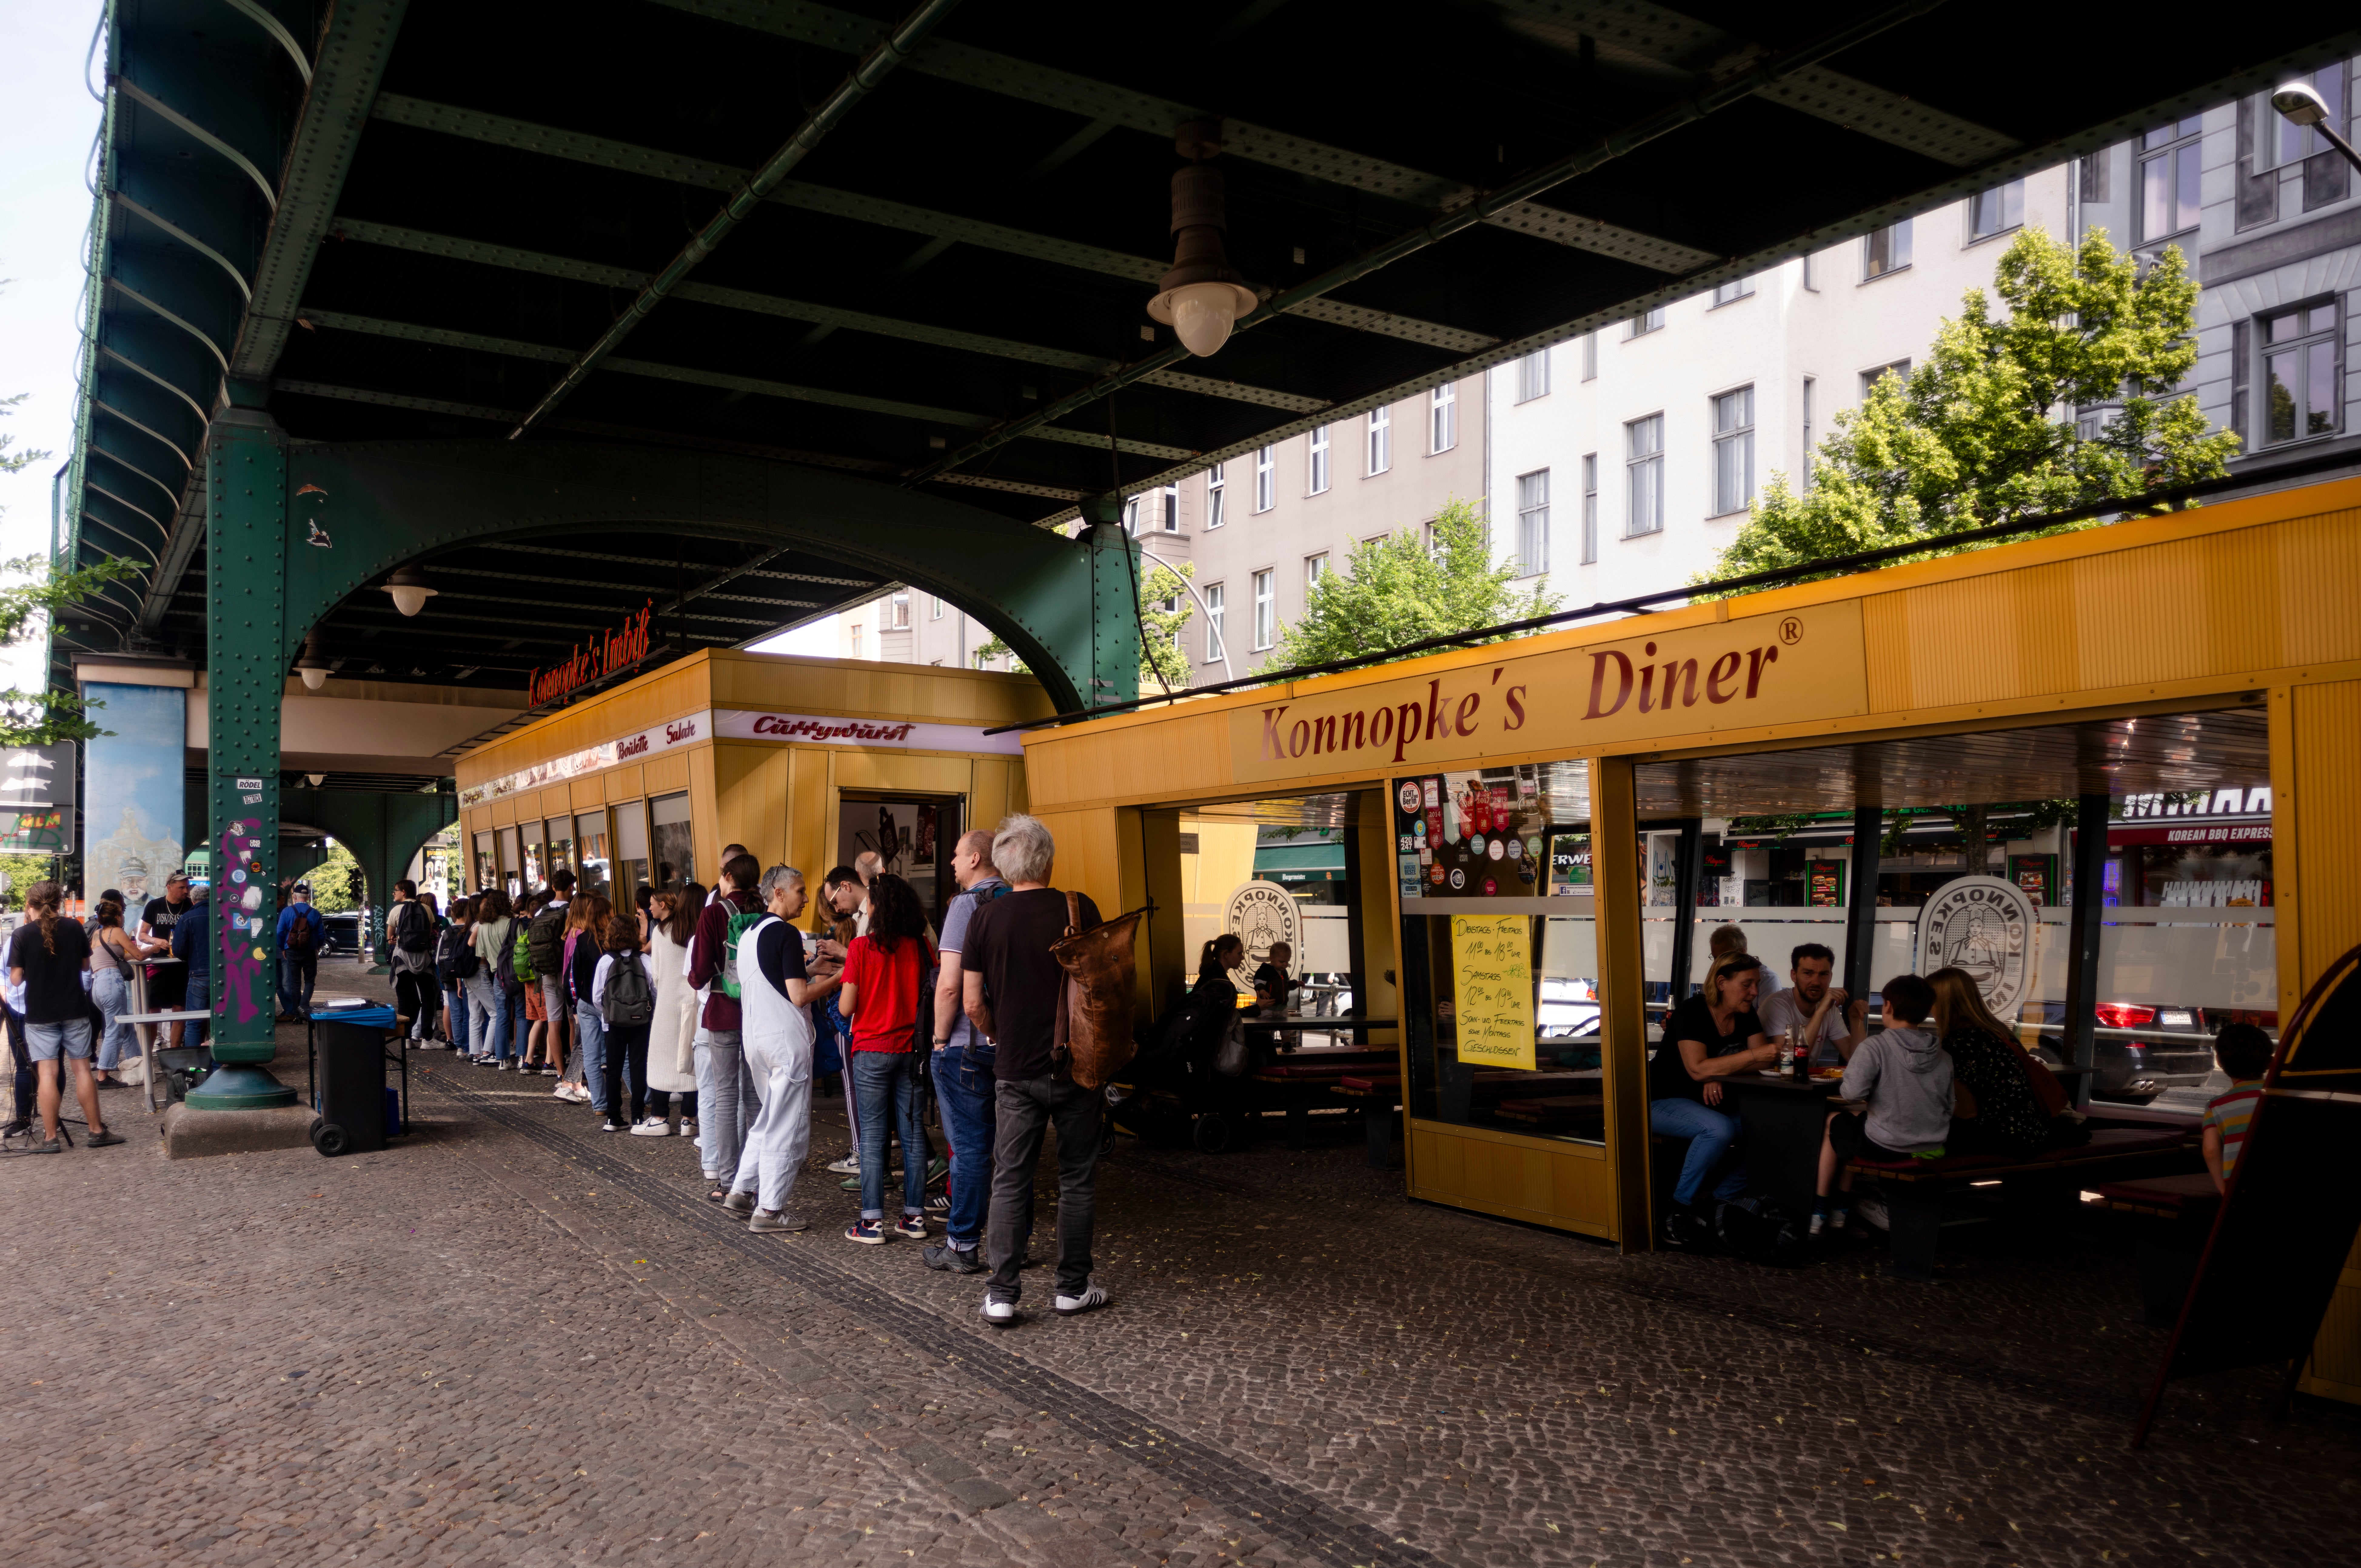 At Konnopke’s Imbiss, a fast food restaurant under the tracks at Eberswalder Straße subway station